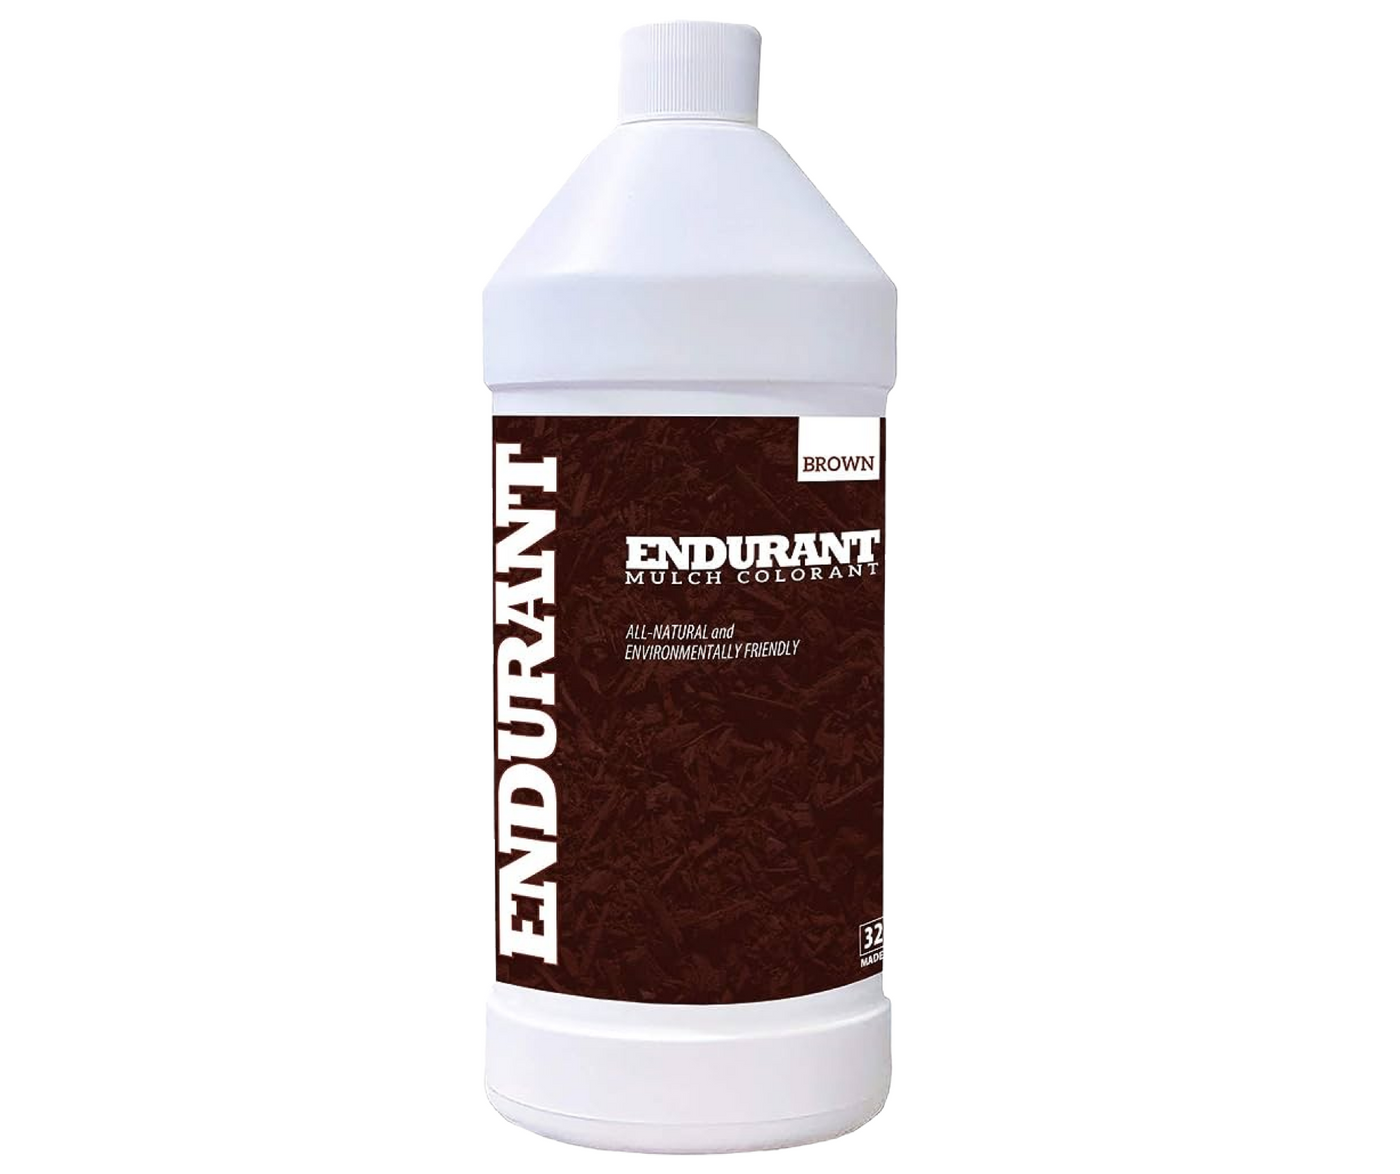 Endurant Mulch Colourant - The best non toxic mulch dye